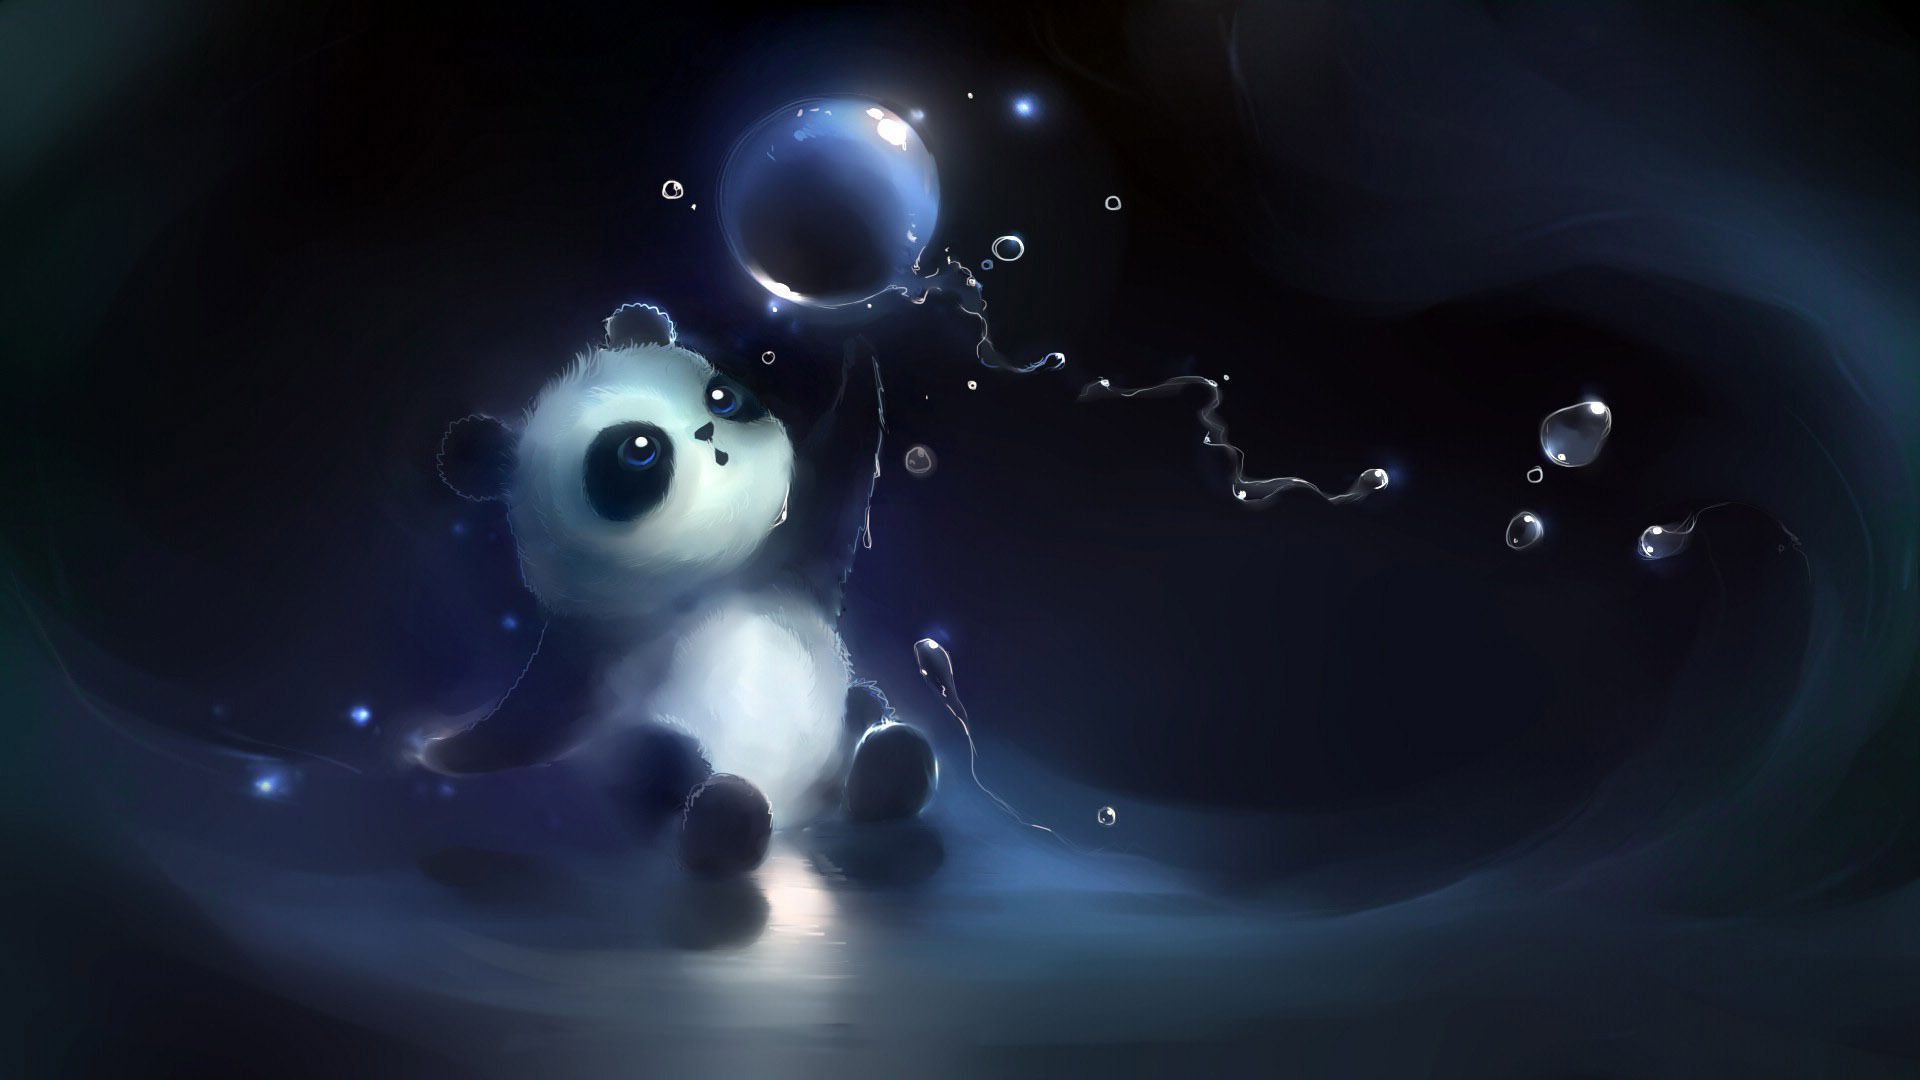 Cute Panda Playing Bubble Cartoon Wallpaper Ideas for